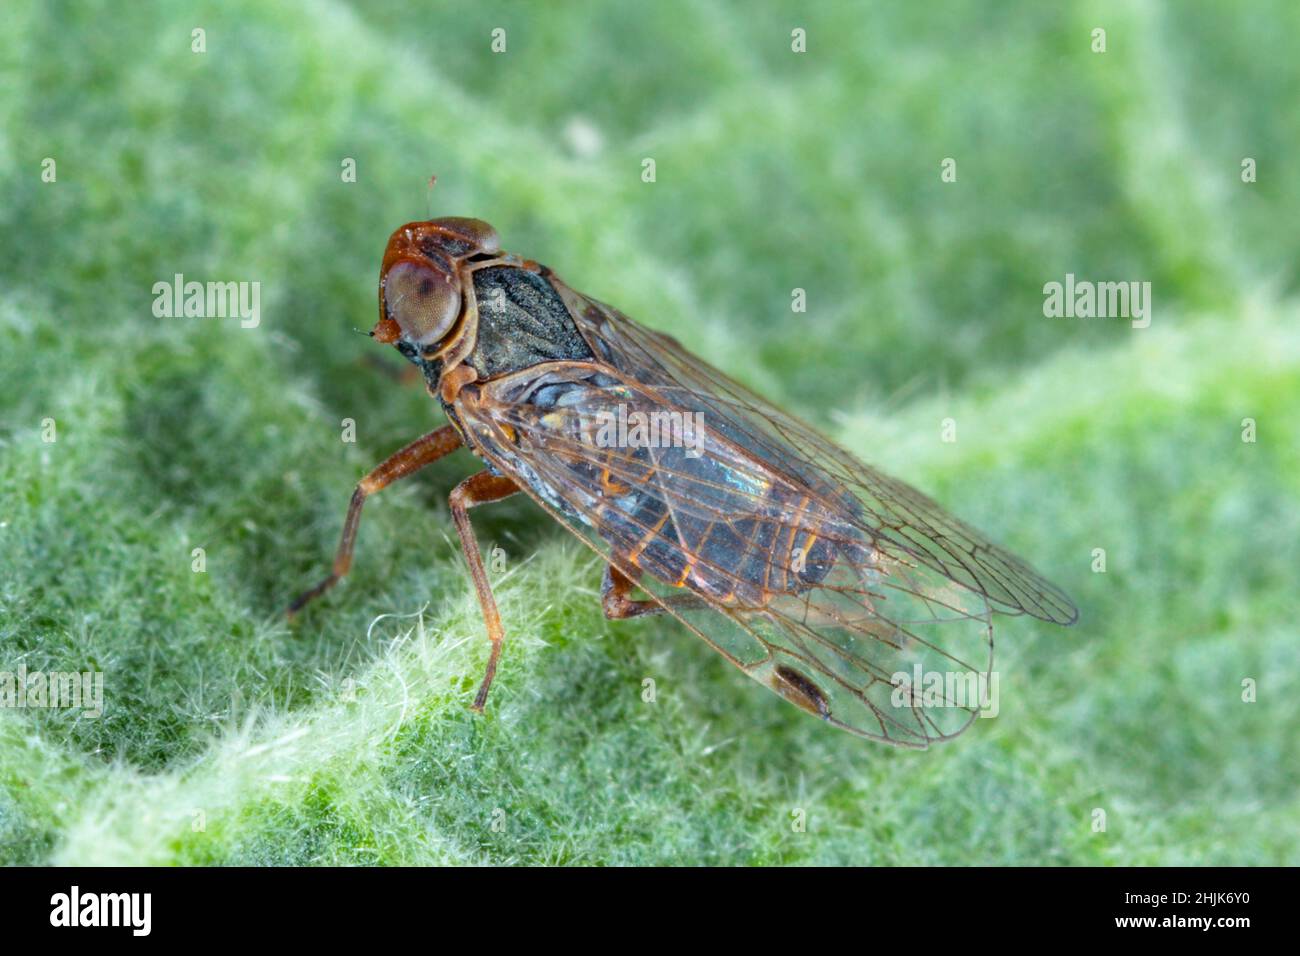 Planthopper, Cixiidae on a green leaf. Macro photo. Stock Photo